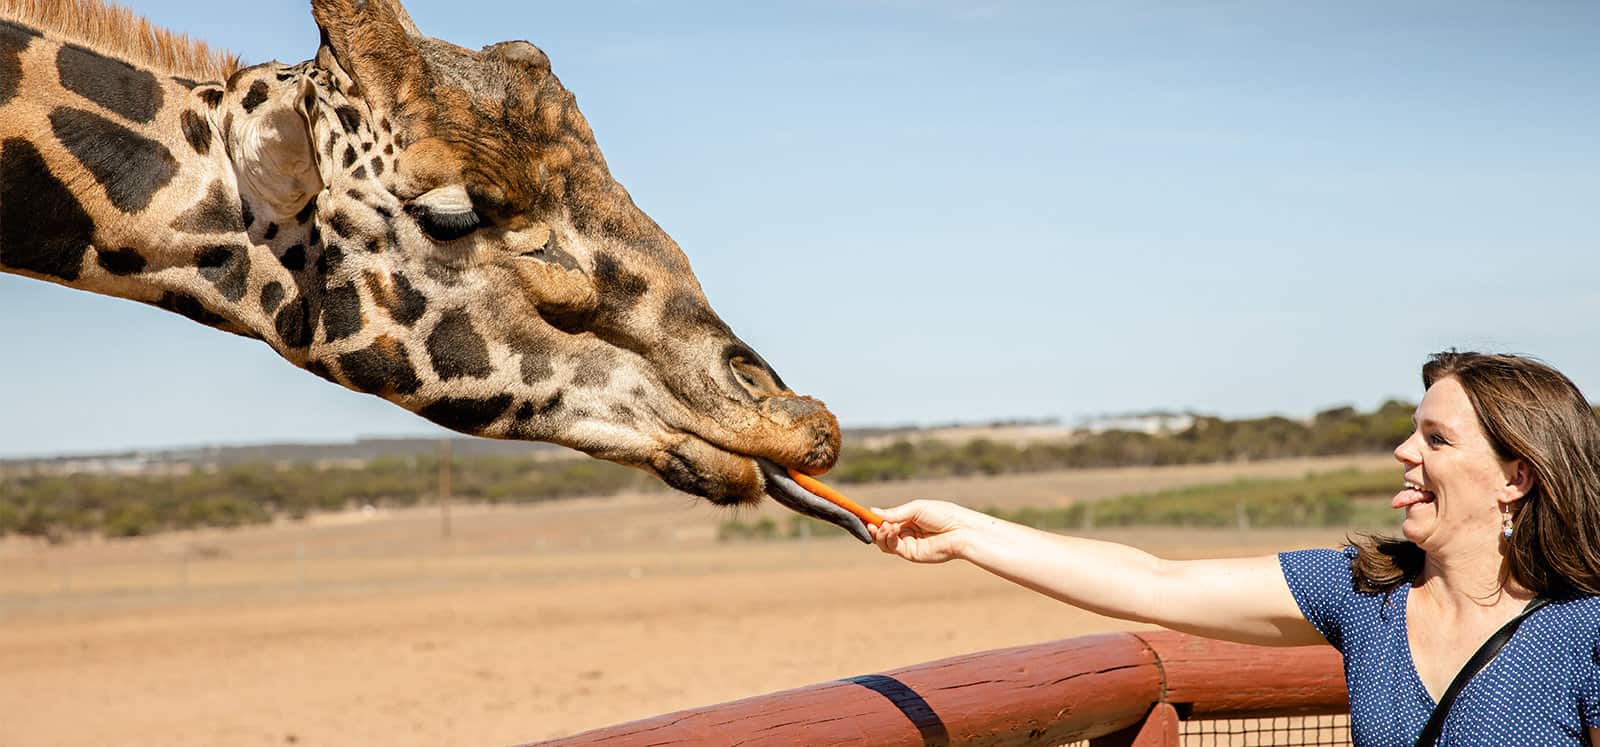 Giraffe being hand fed a carrot during Giraffe Safari